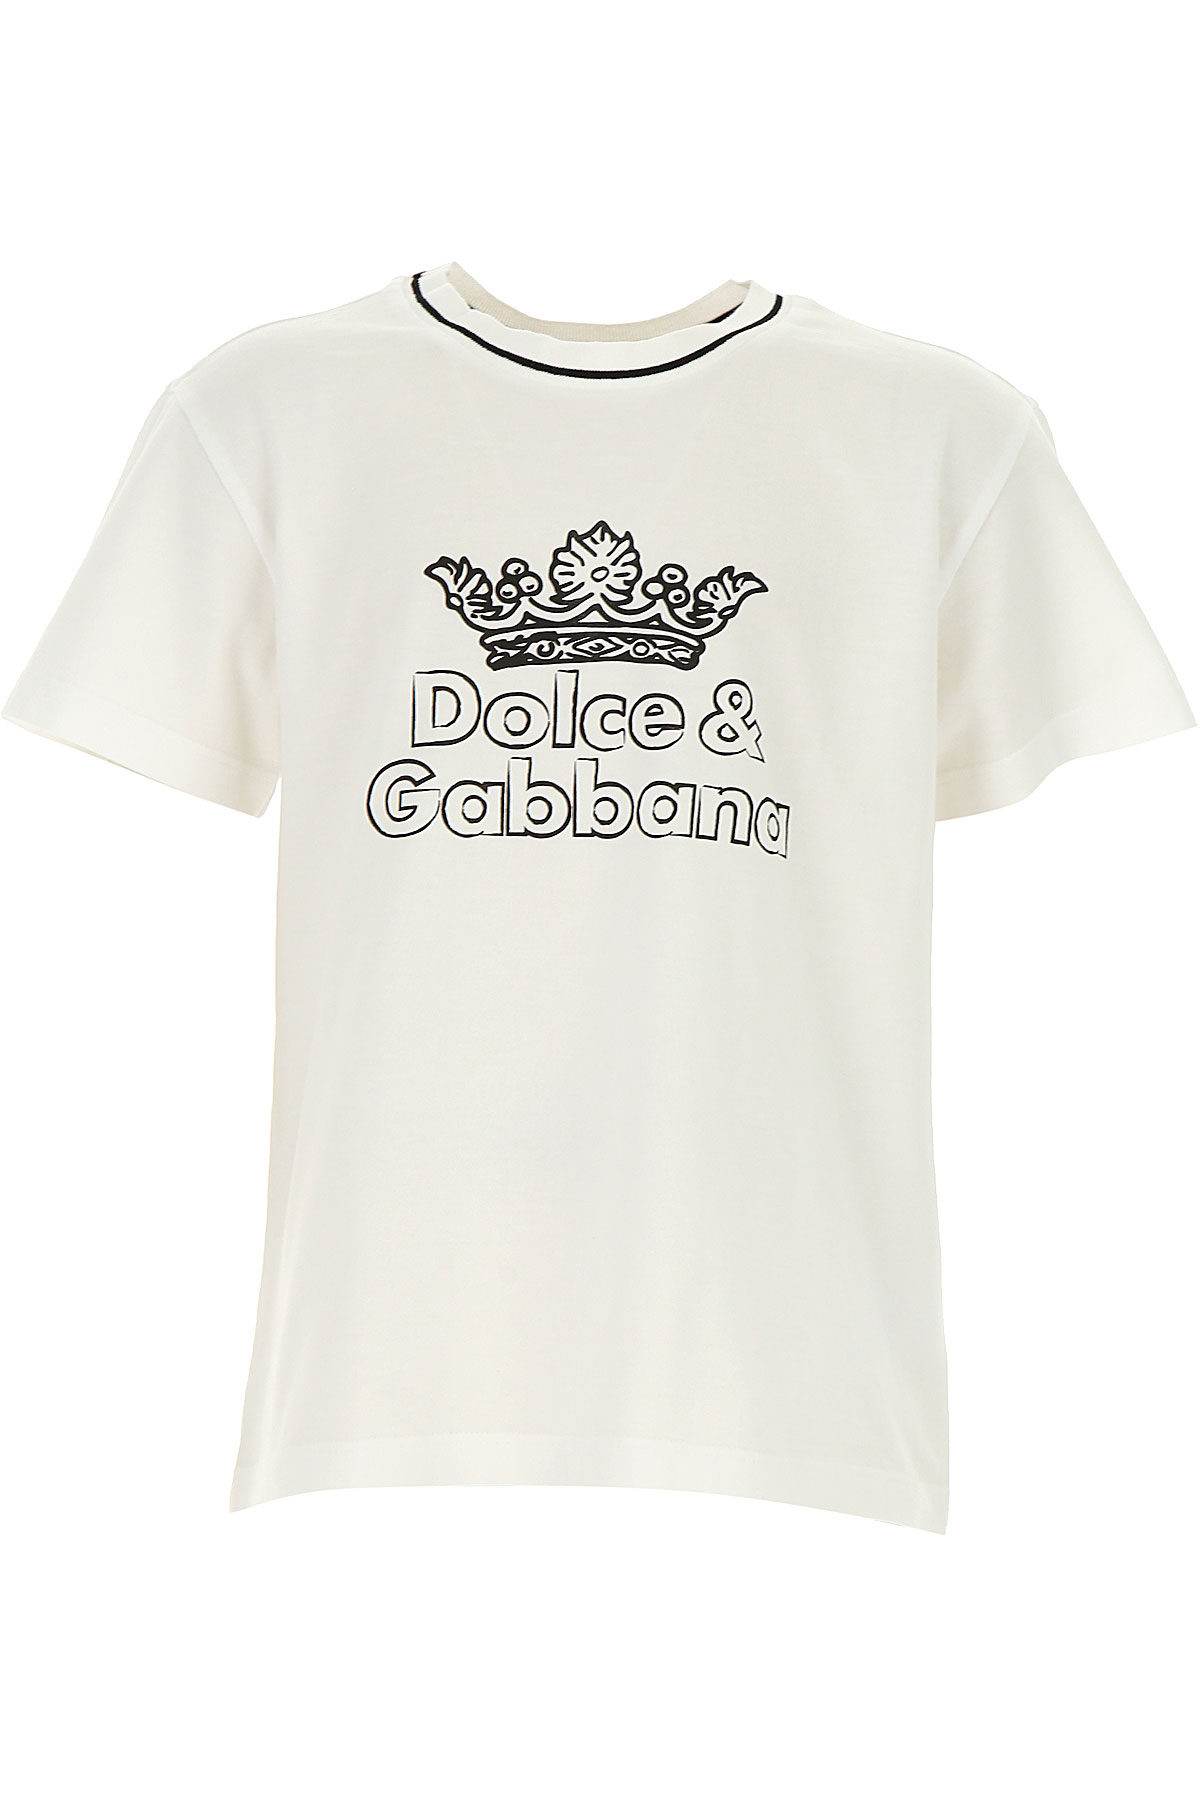 Dolce & Gabbana Kinder T-Shirt für Jungen Günstig im Sale, Weiss, Baumwolle, 2017, 10Y 12Y 3Y 4Y 6Y 8Y